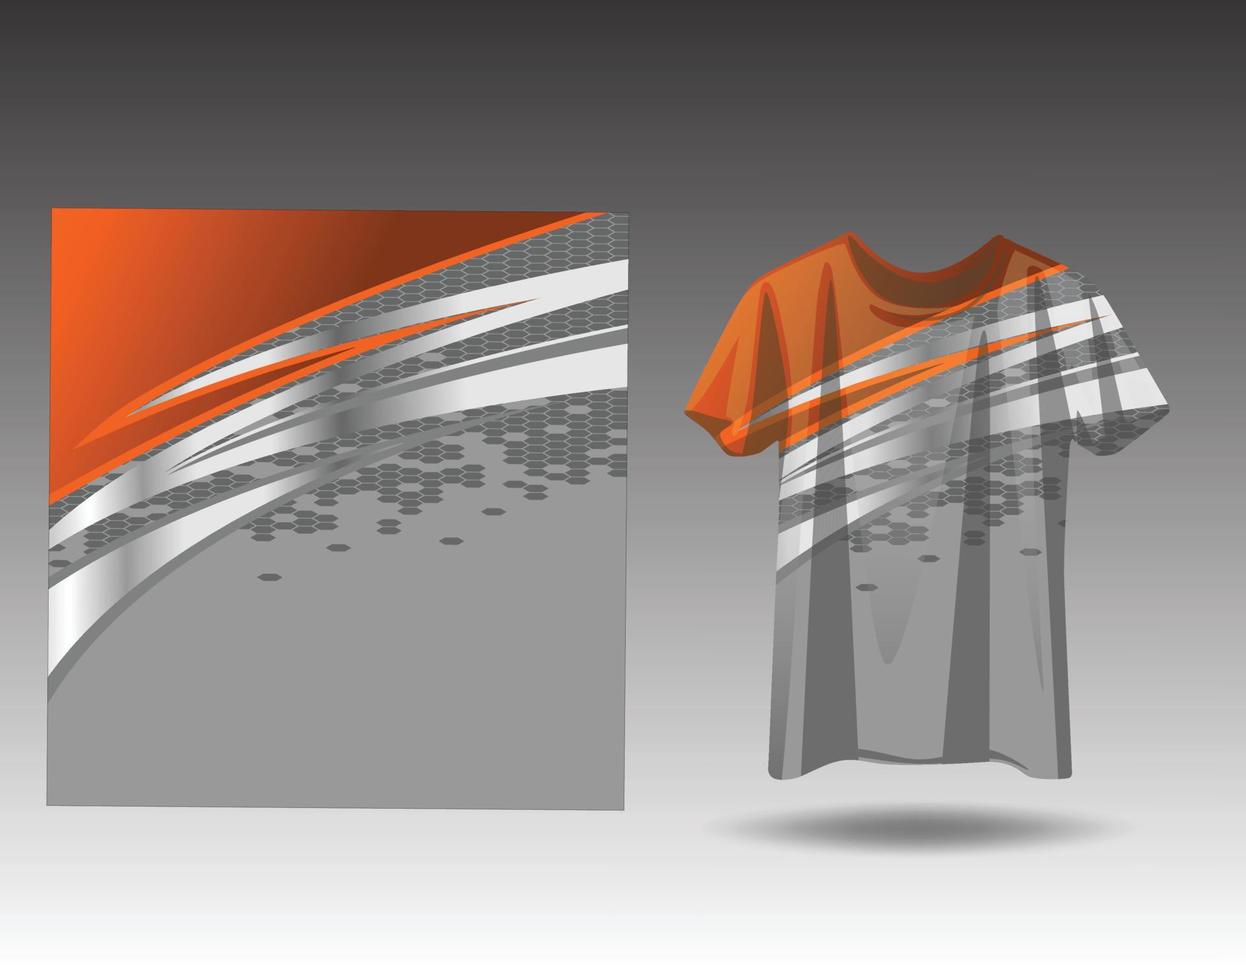 t-shirt sport grunge achtergrond voor extreem Jersey team racing wielersport Amerikaans voetbal gaming backdrop behang vector